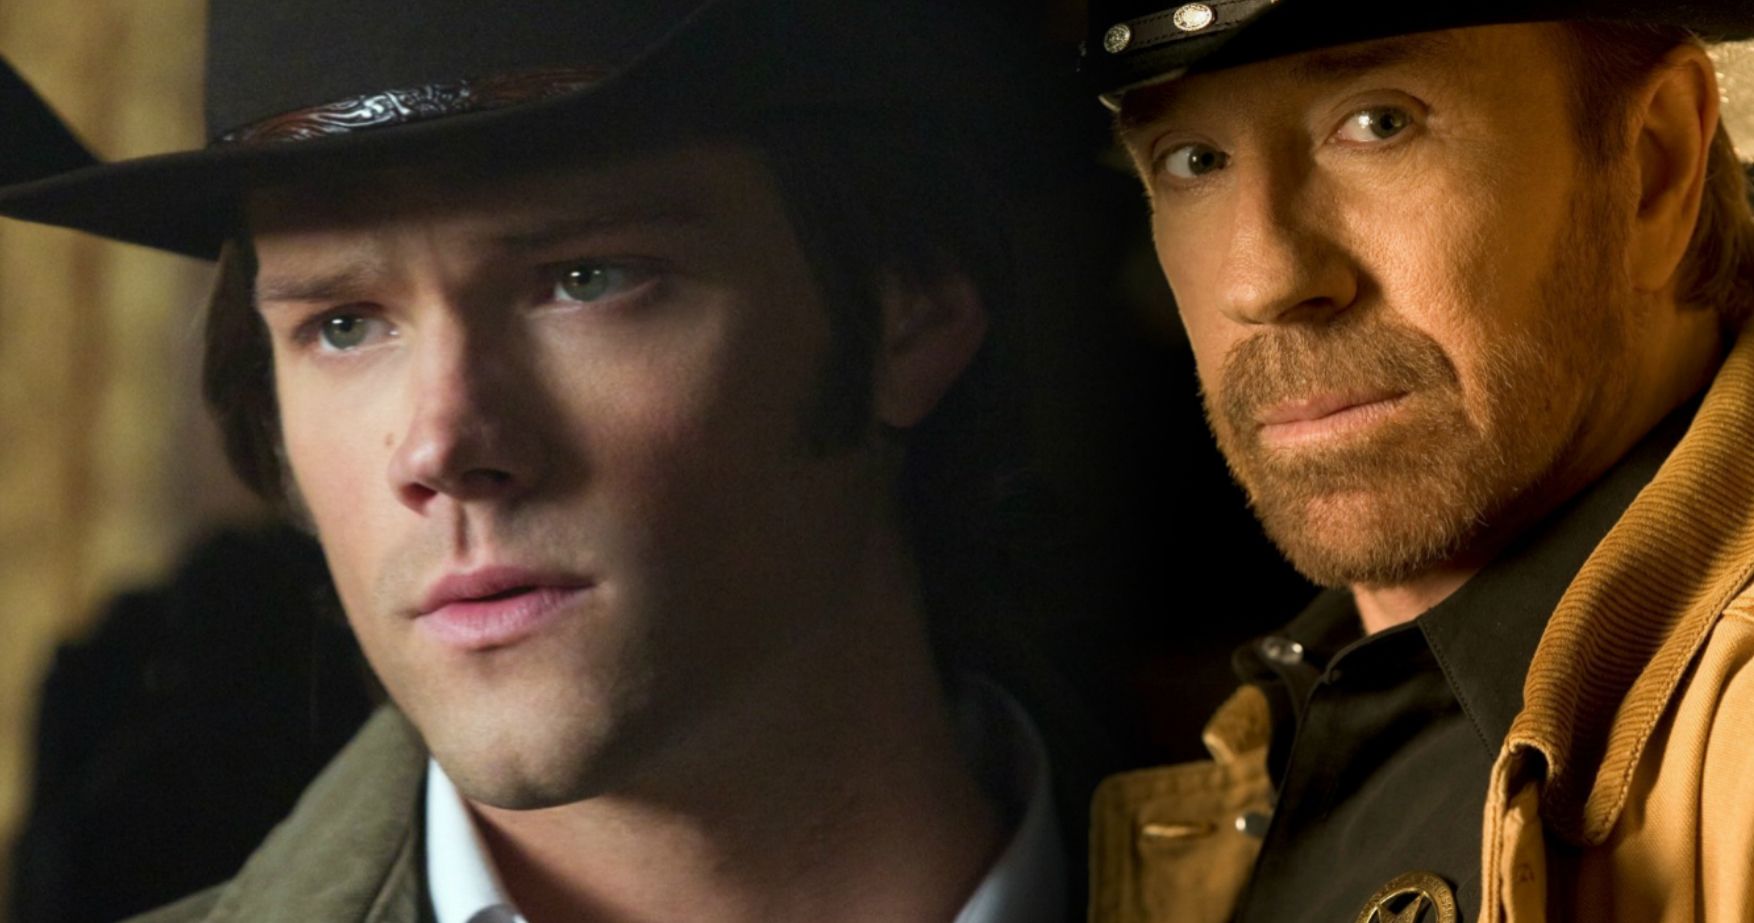 Supernatural Star Jared Padalecki Takes on Walker, Texas Ranger Reboot